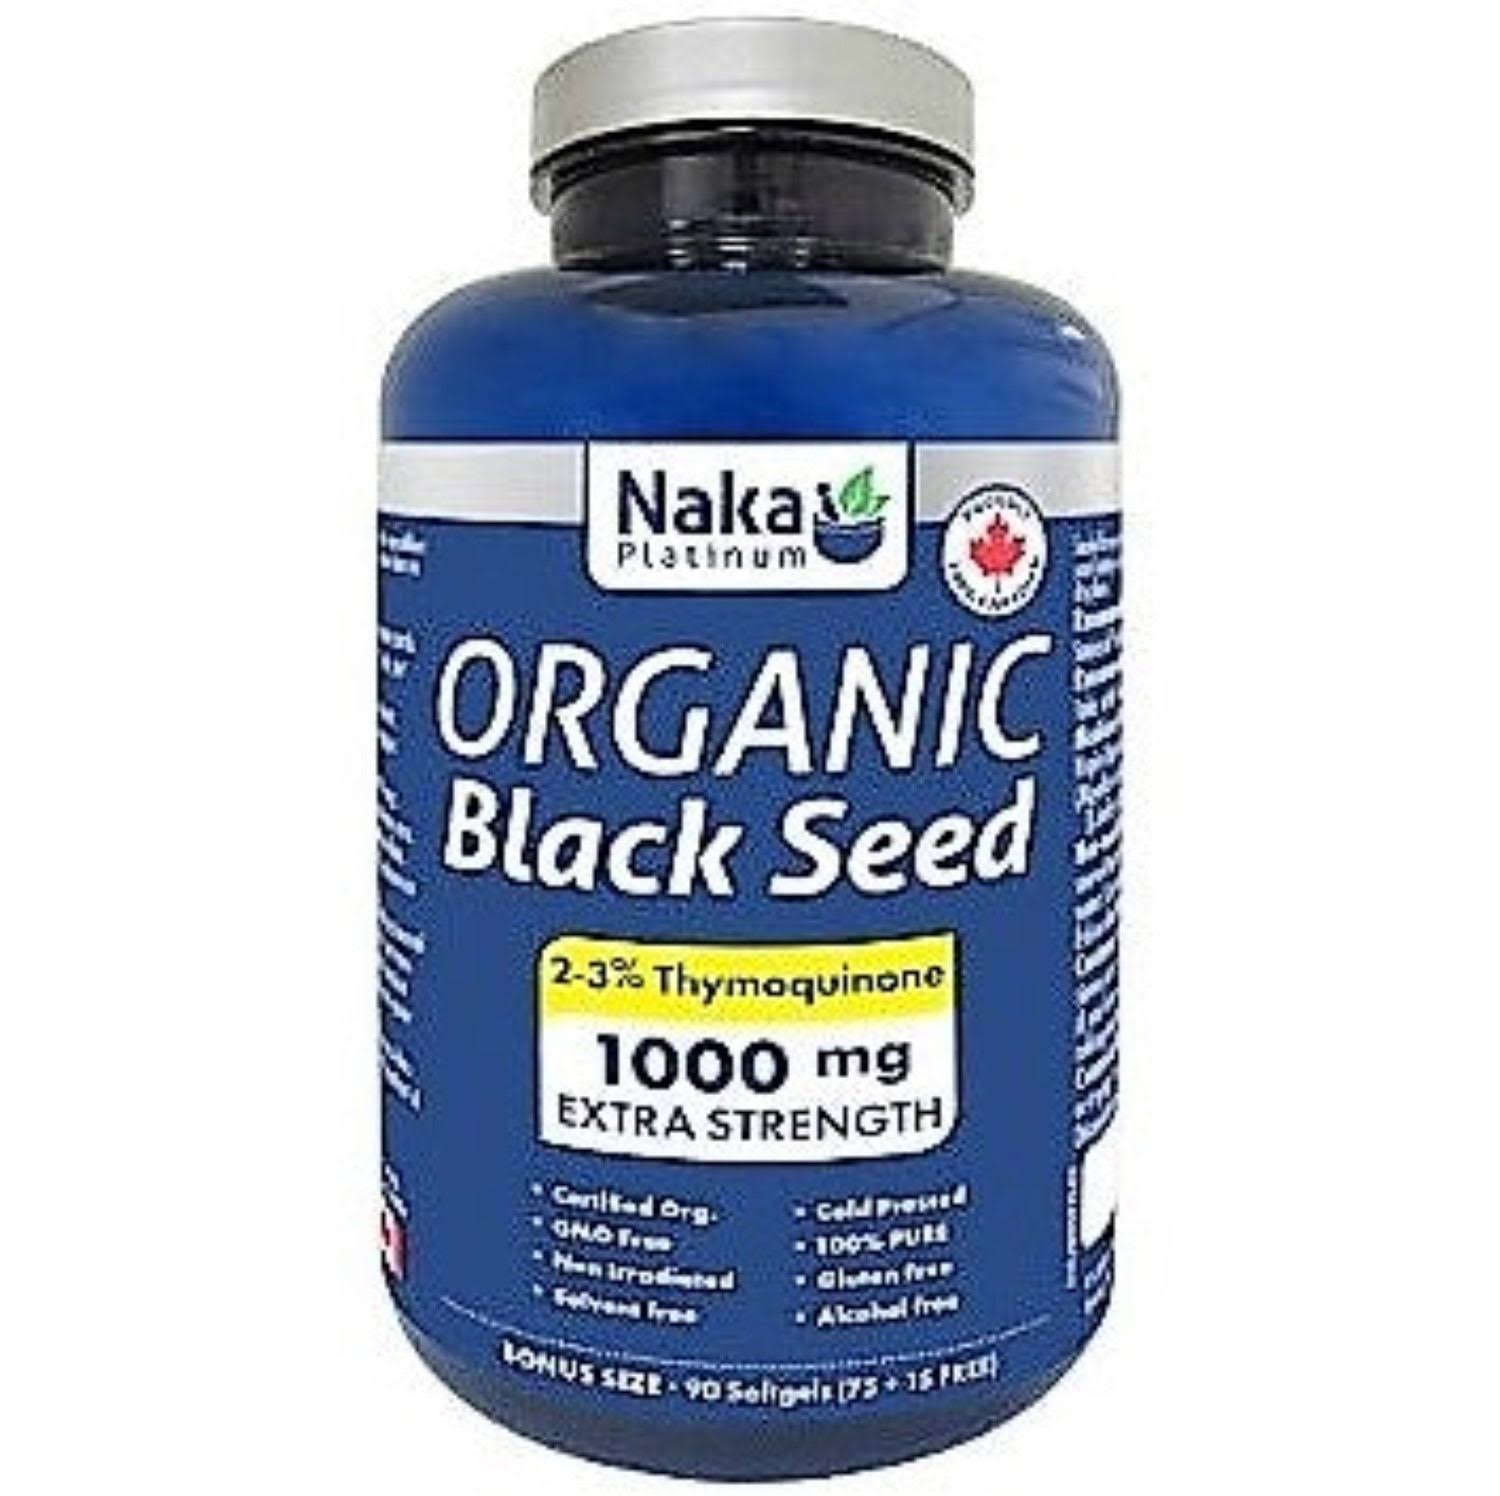 Platinum Organic Black Seed 1000mg Extra Strength - 90 Softgels